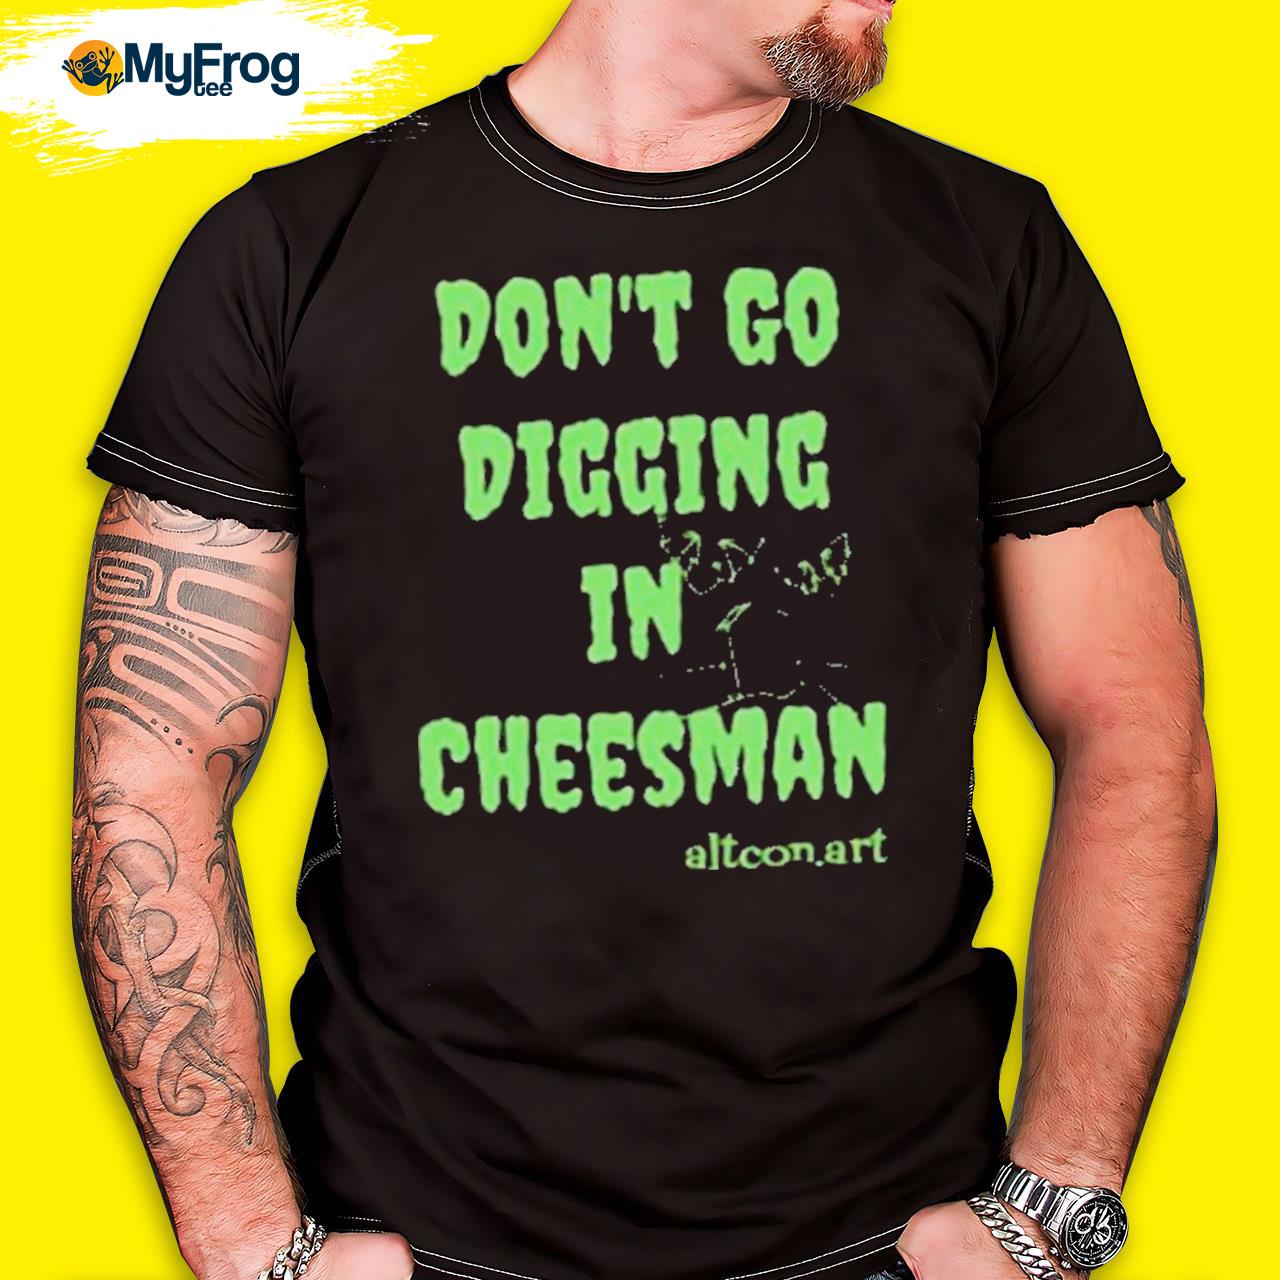 Don’t Go Digging In Cheesman Altconart T-shirt